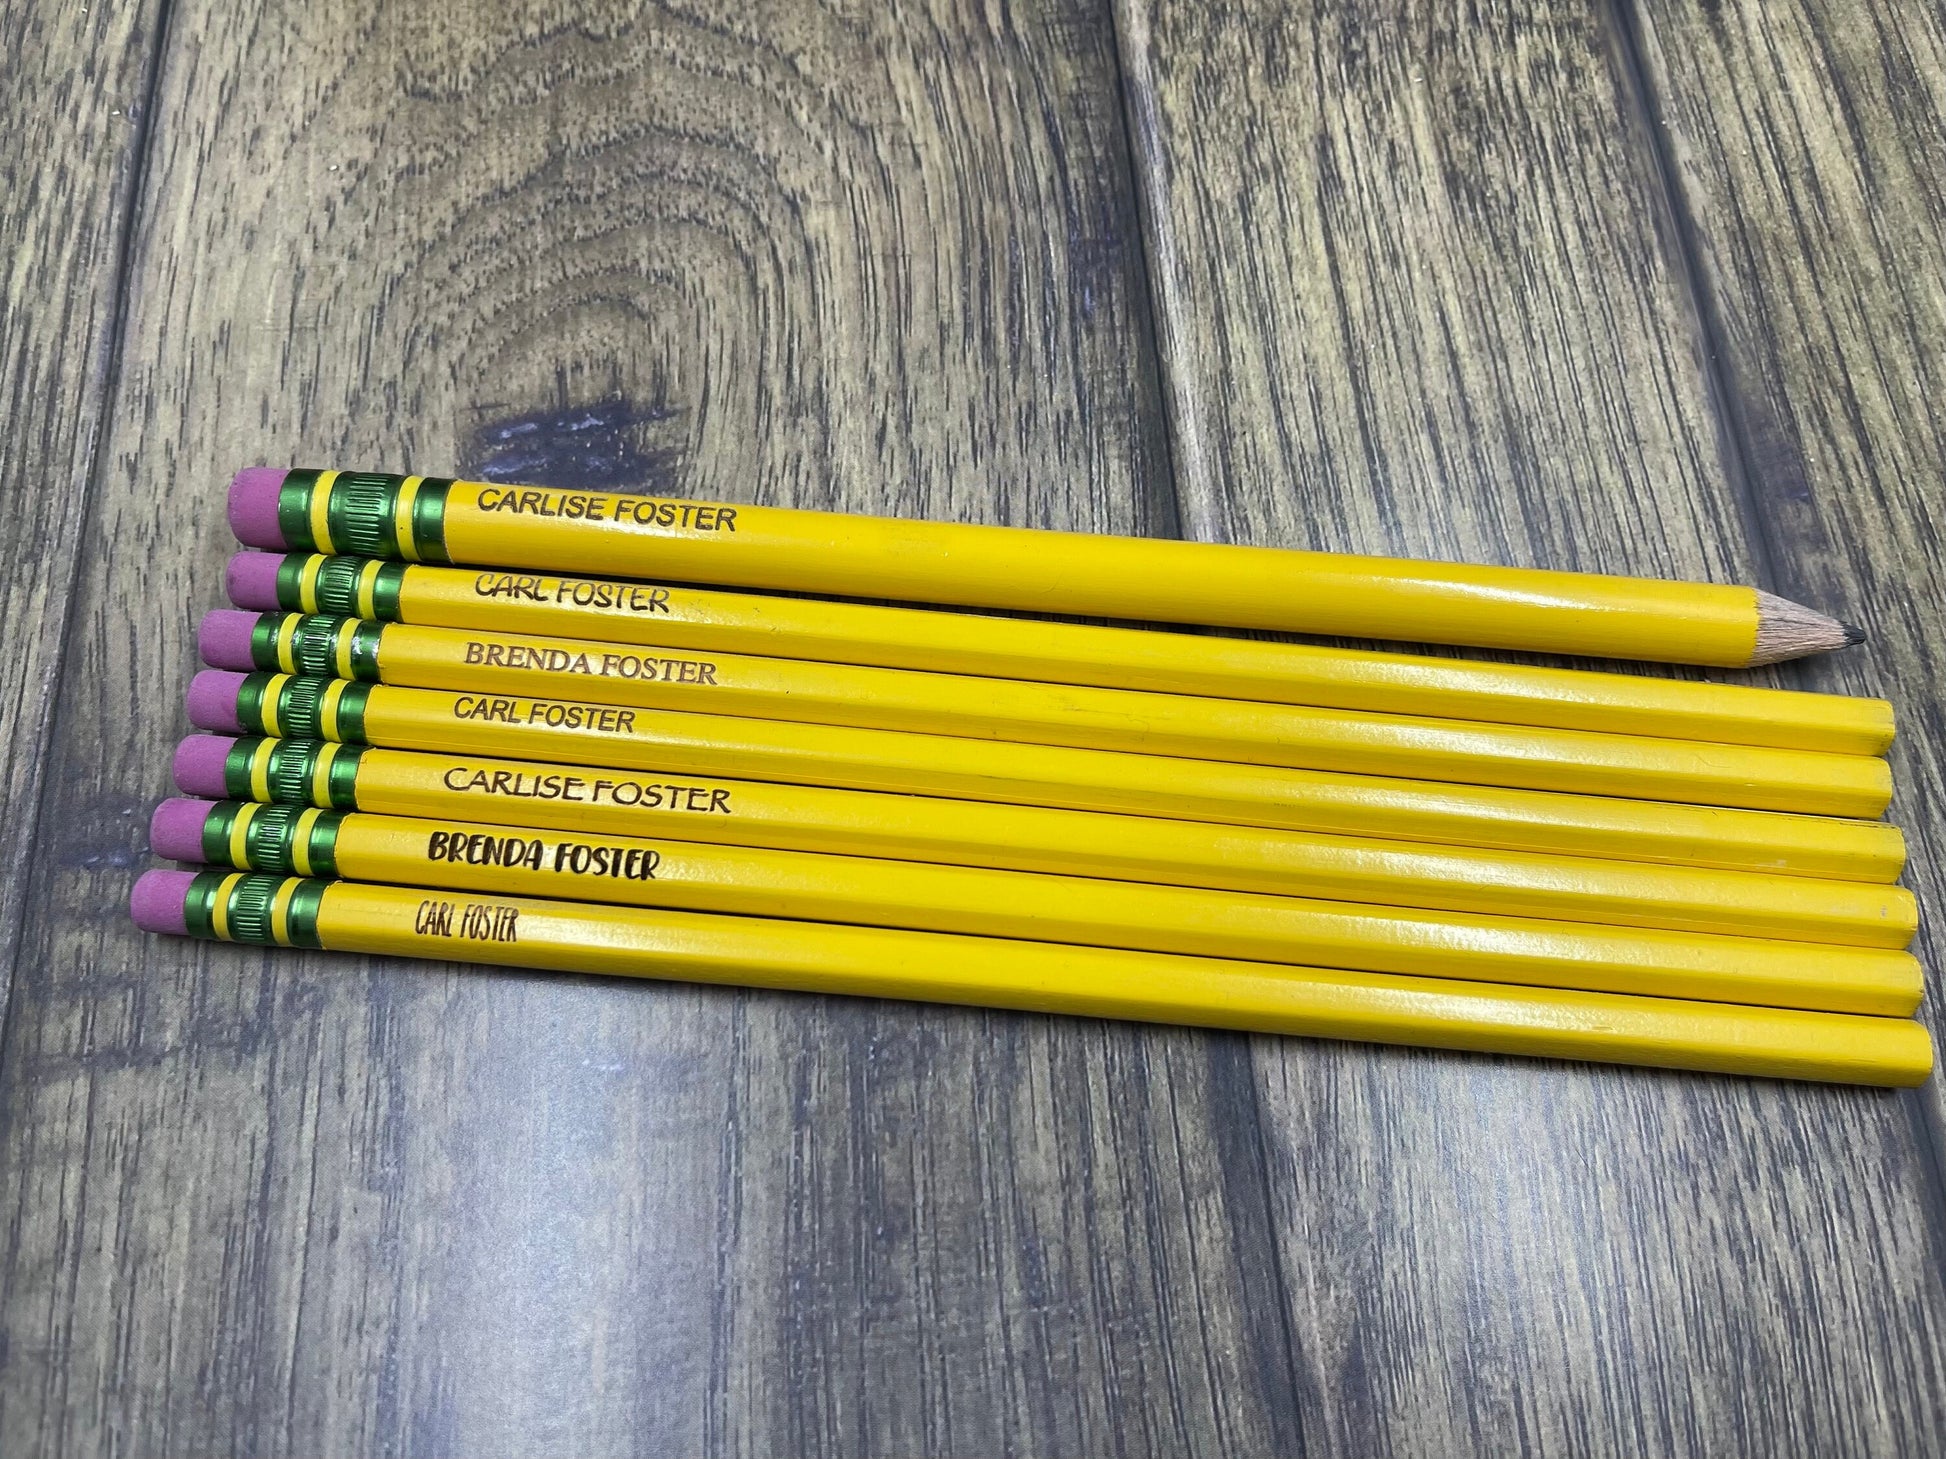 Personalized #2 pencils, Noir pencils, Ticonderoga engraved pencils, P –  Pretty Palms